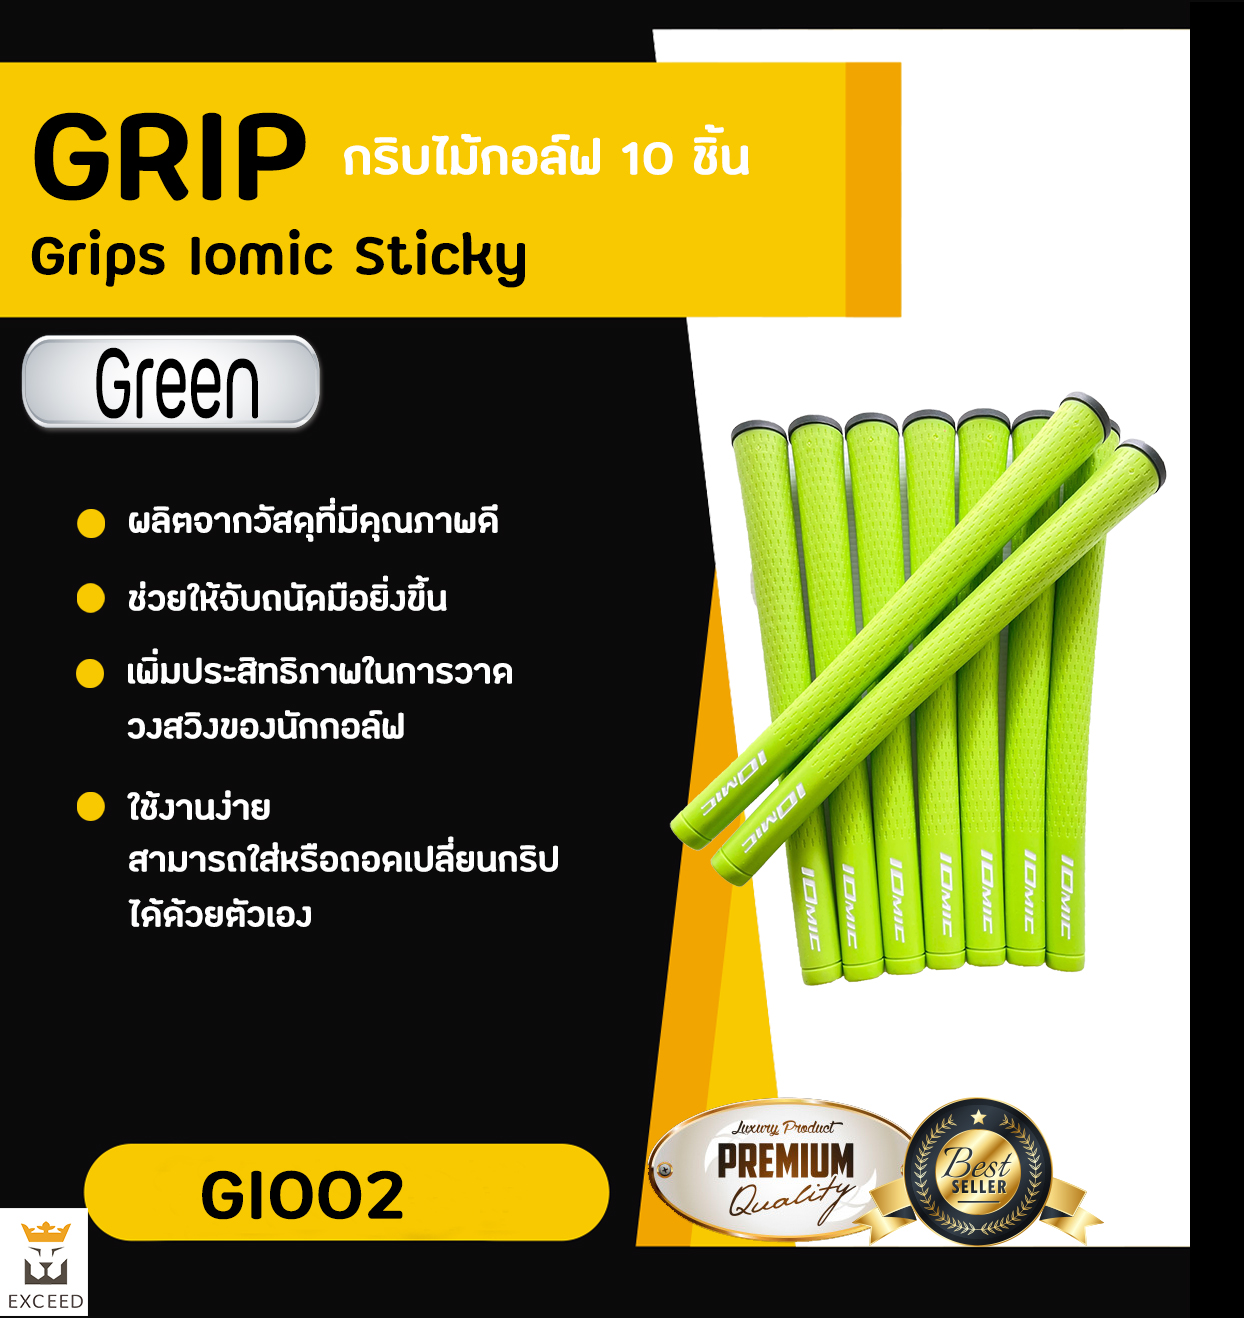 Iomic Sticky 2.3 Grip, Ribbed Colourful มีหลากหลายสีให้เลือก Exceed GI002